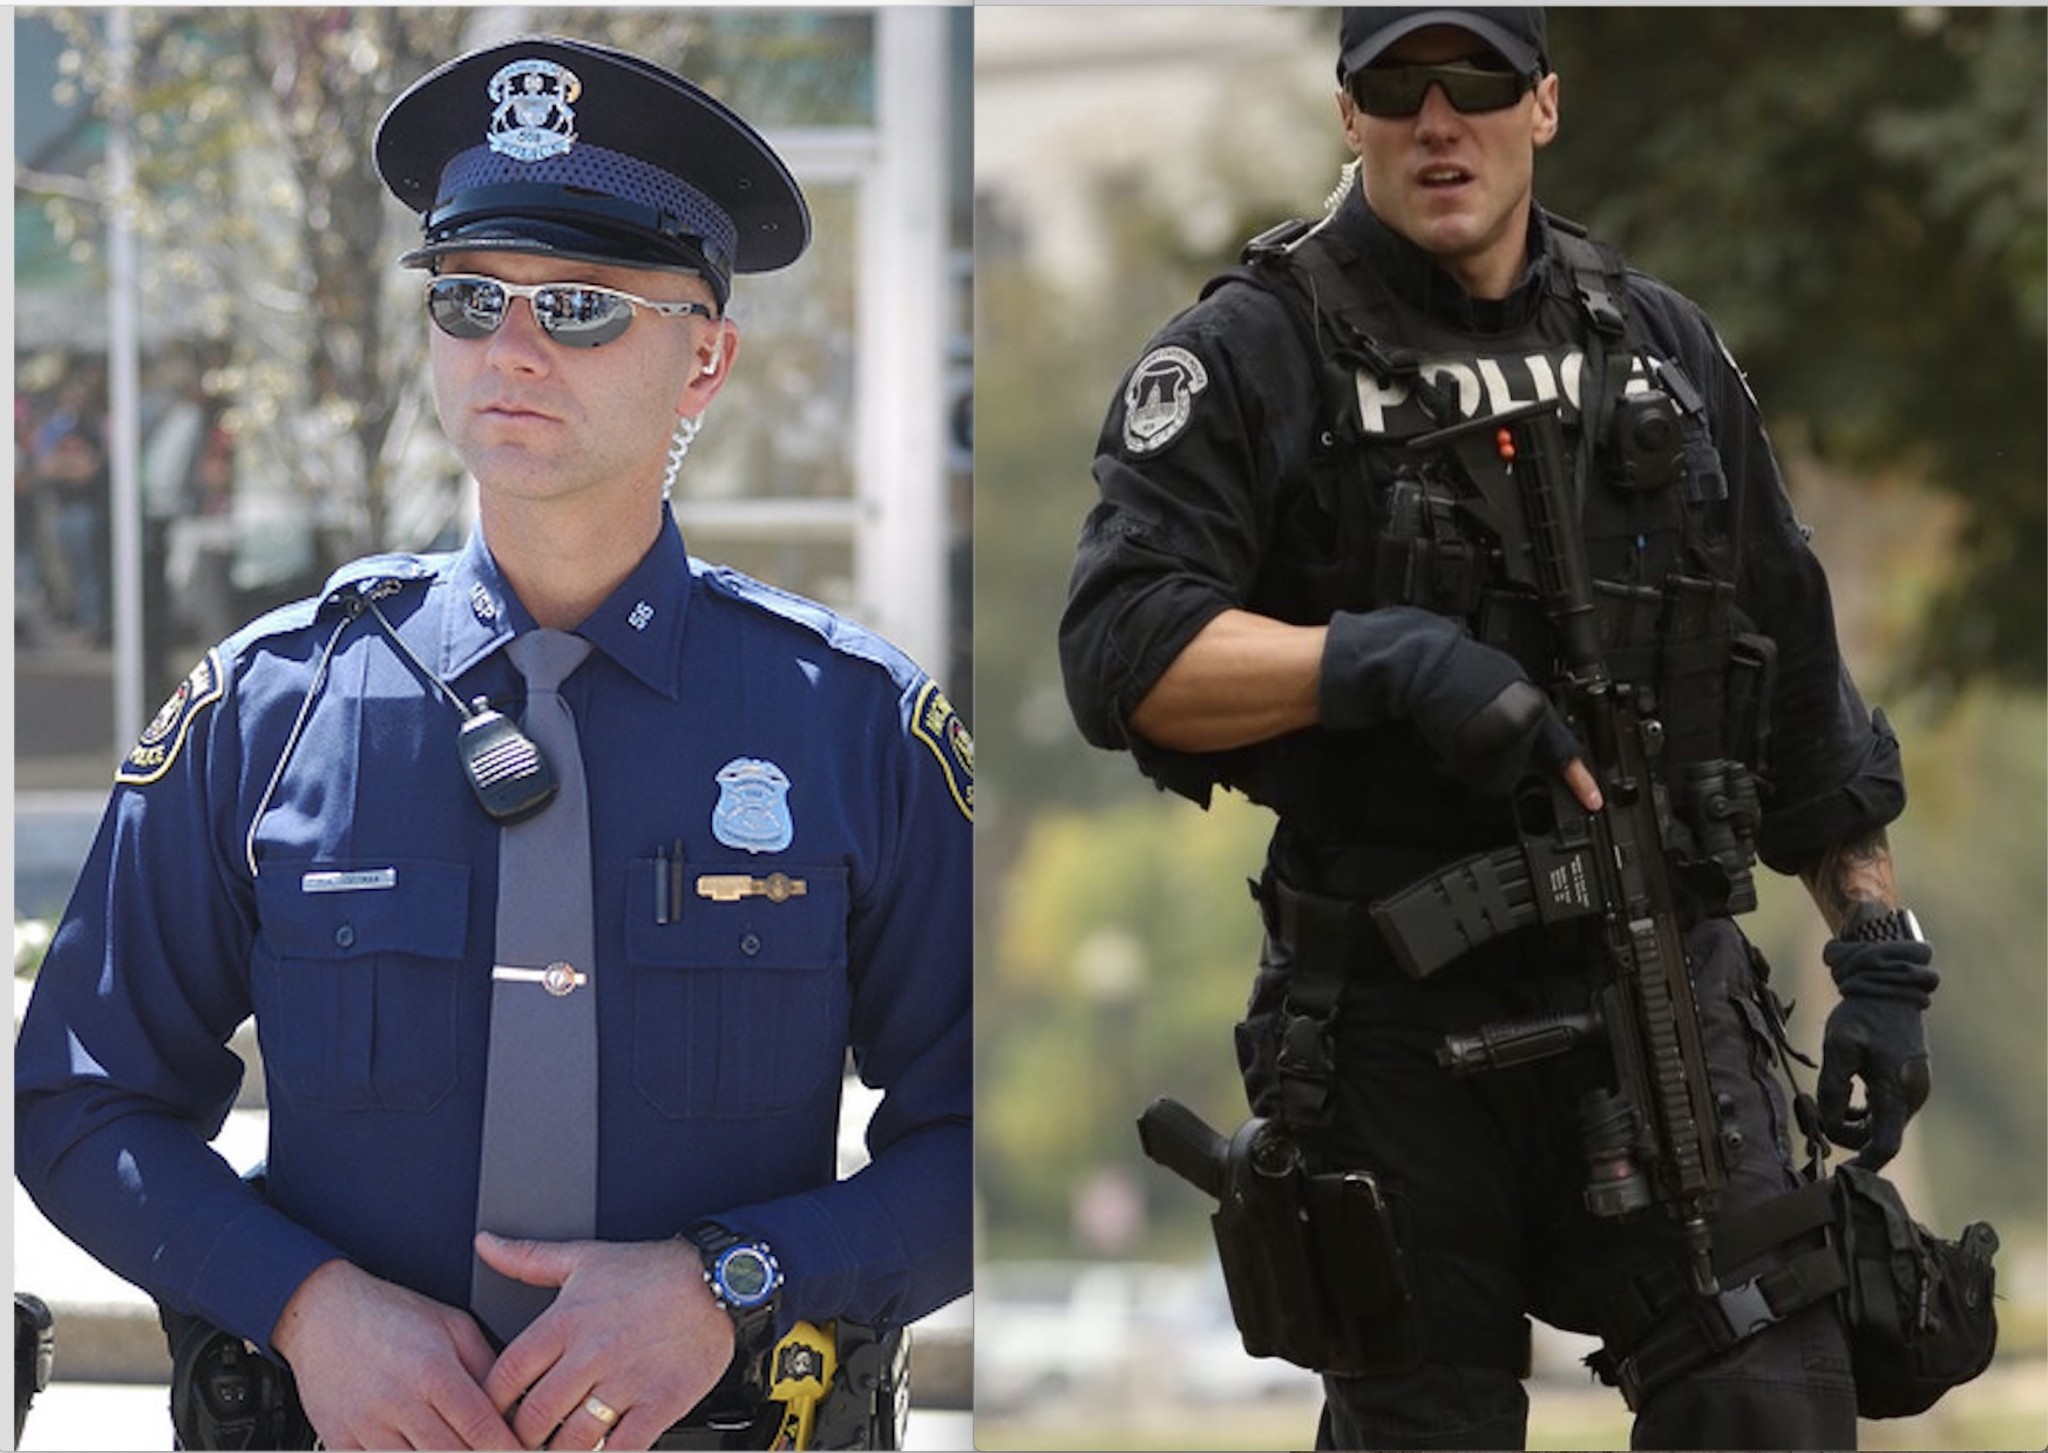 Police Uniform Photo